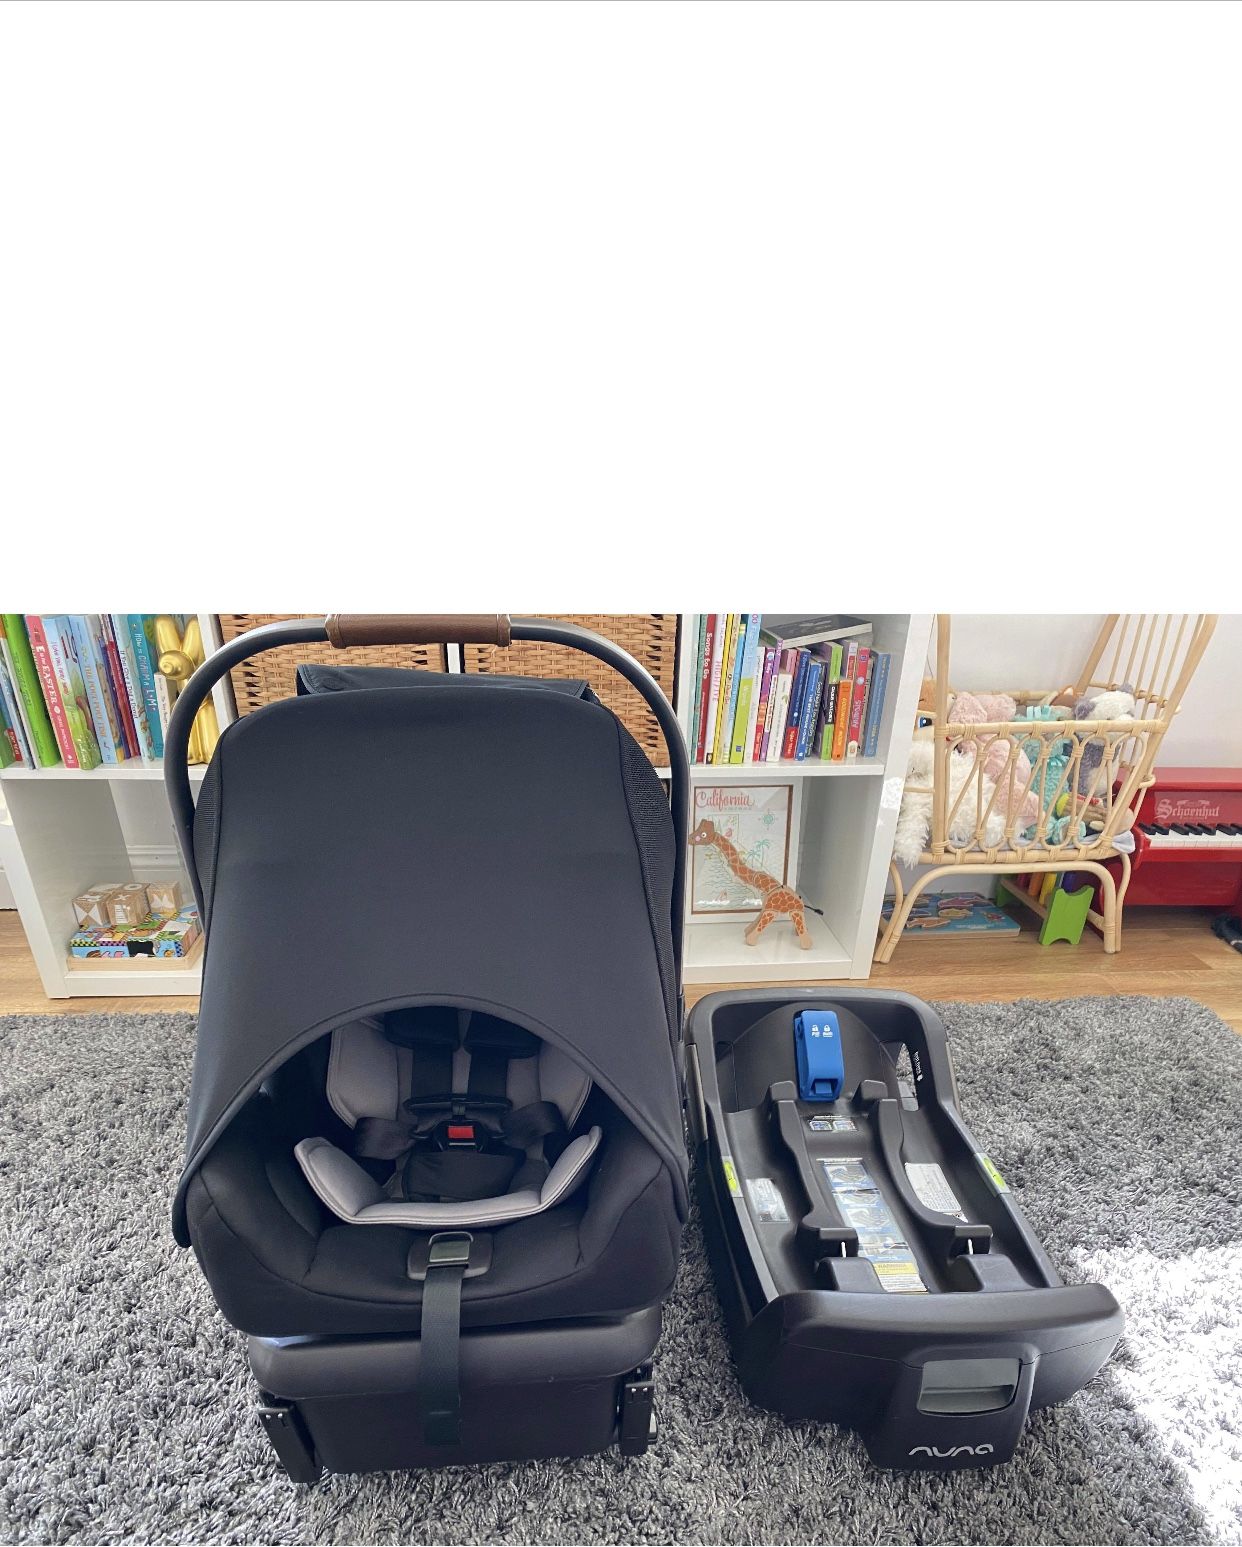 2019 Nuna Pipa Infant Car seat